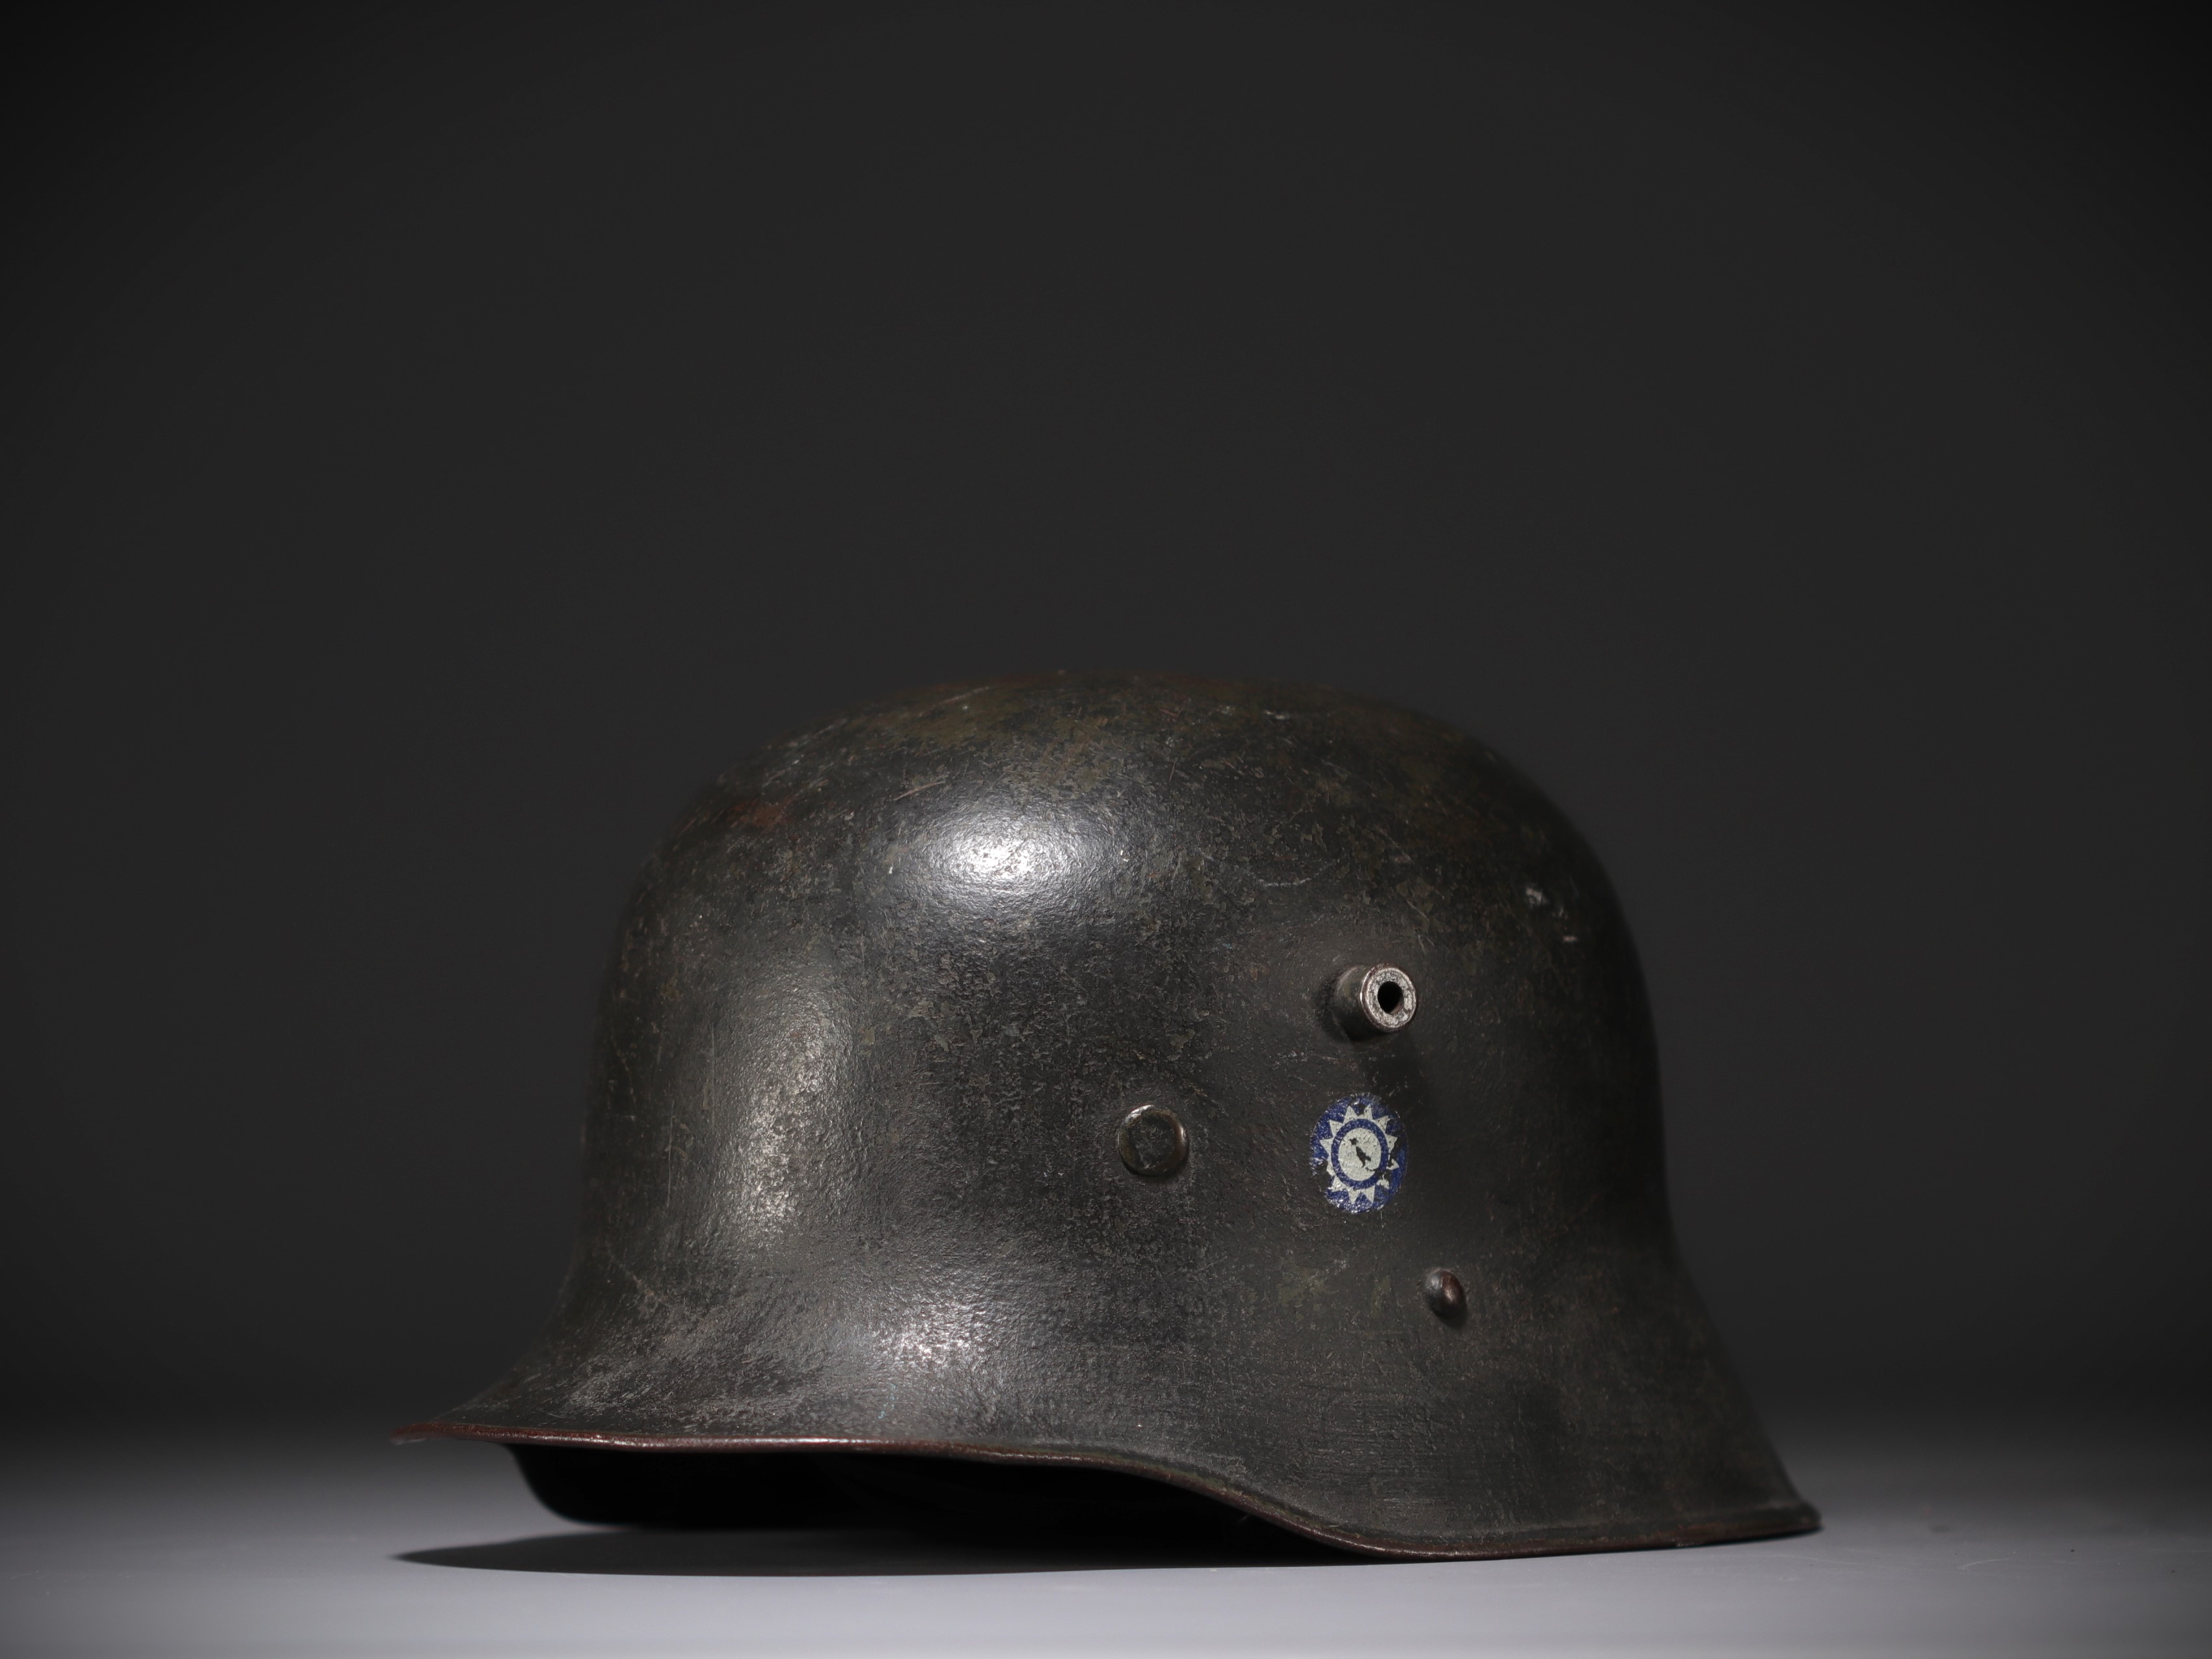 German helmet used by China during Sino-German cooperation.